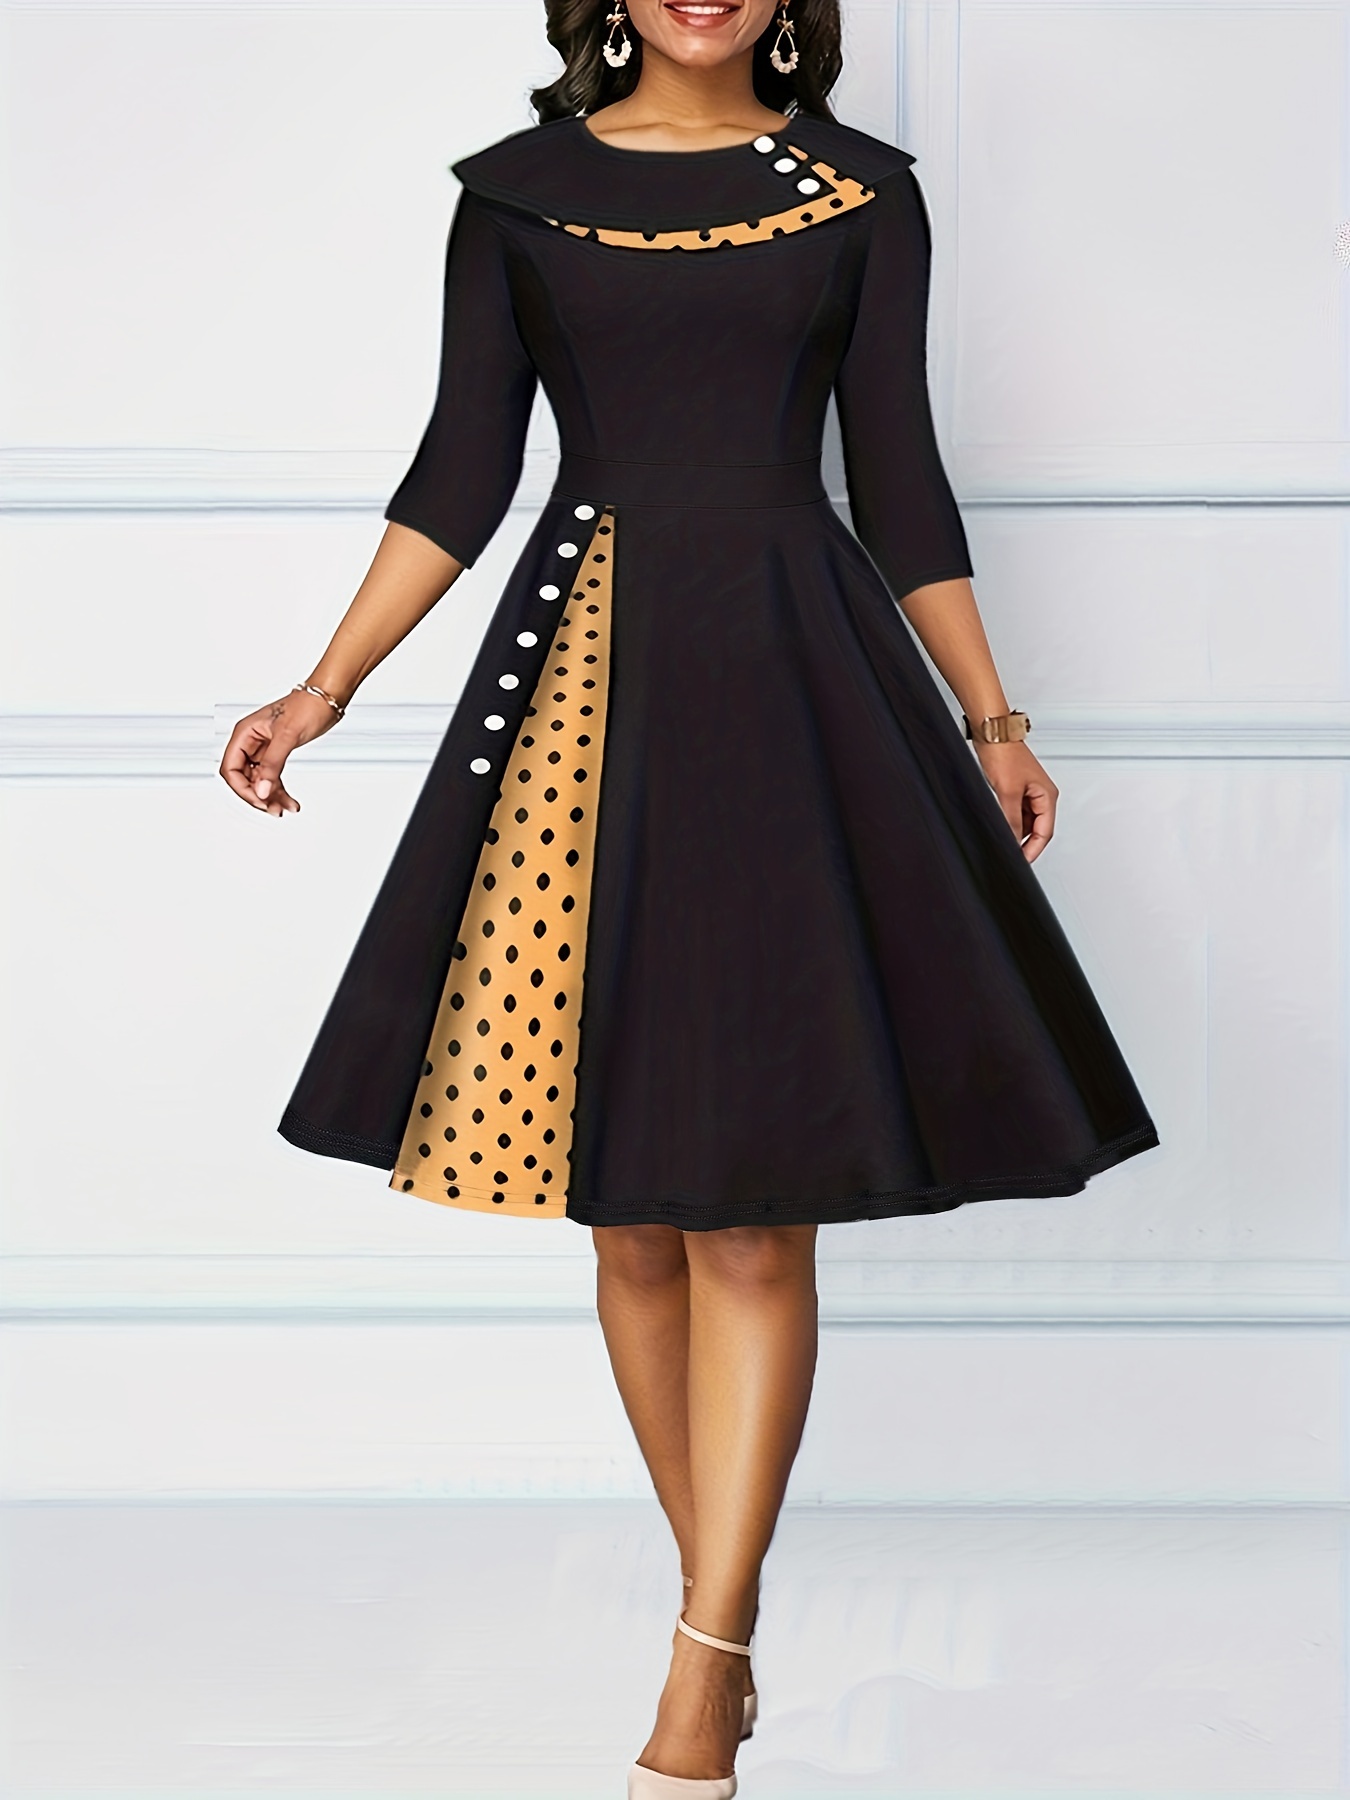 Vintage Dress Style, Houndstooth Dress, Retro Dress, Halter Dress